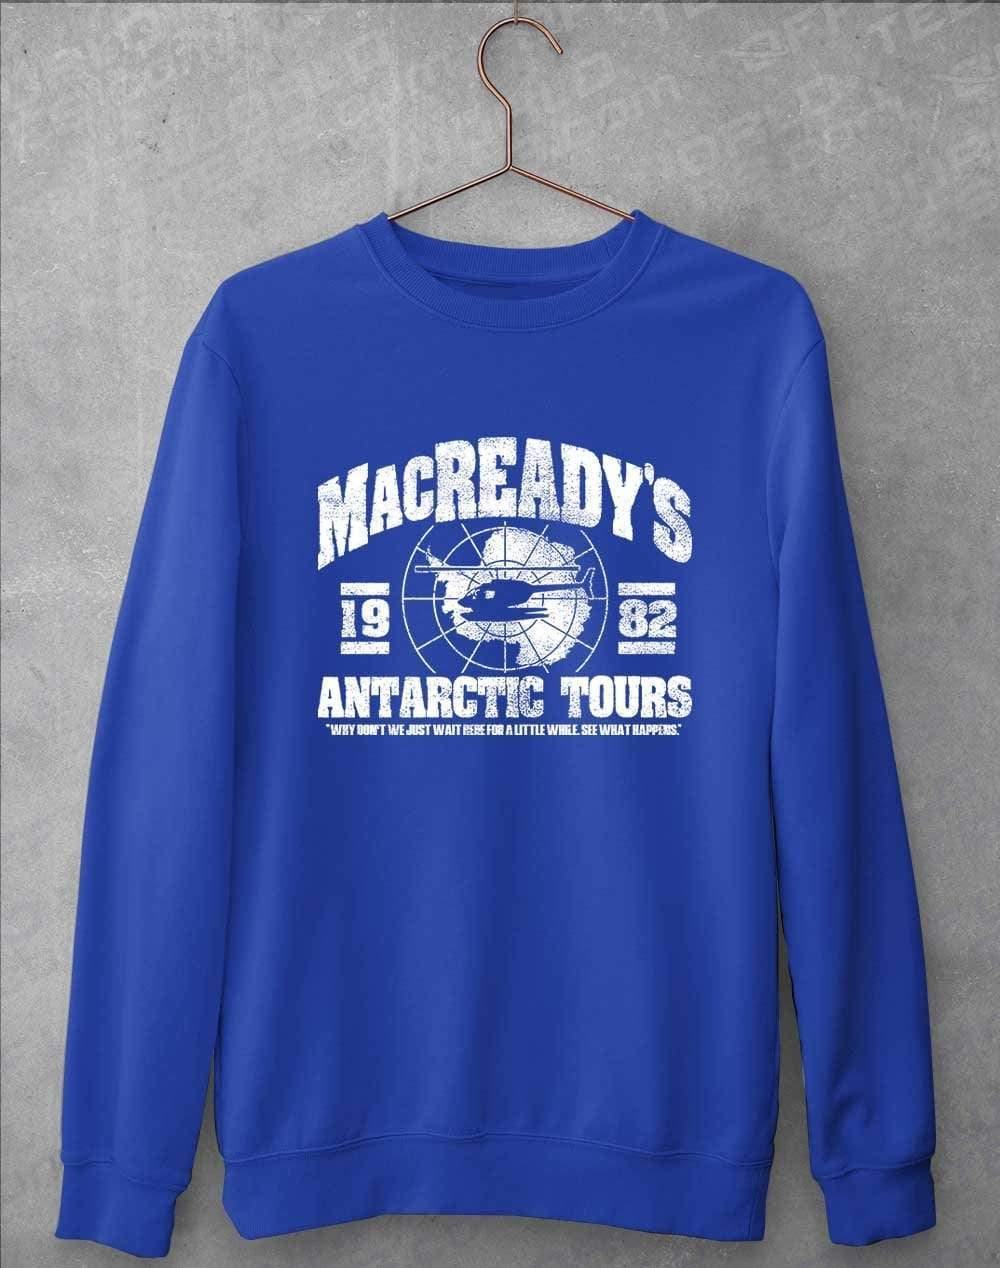 MacReady's Antarctic Tours 1982 Sweatshirt S / Royal Blue  - Off World Tees